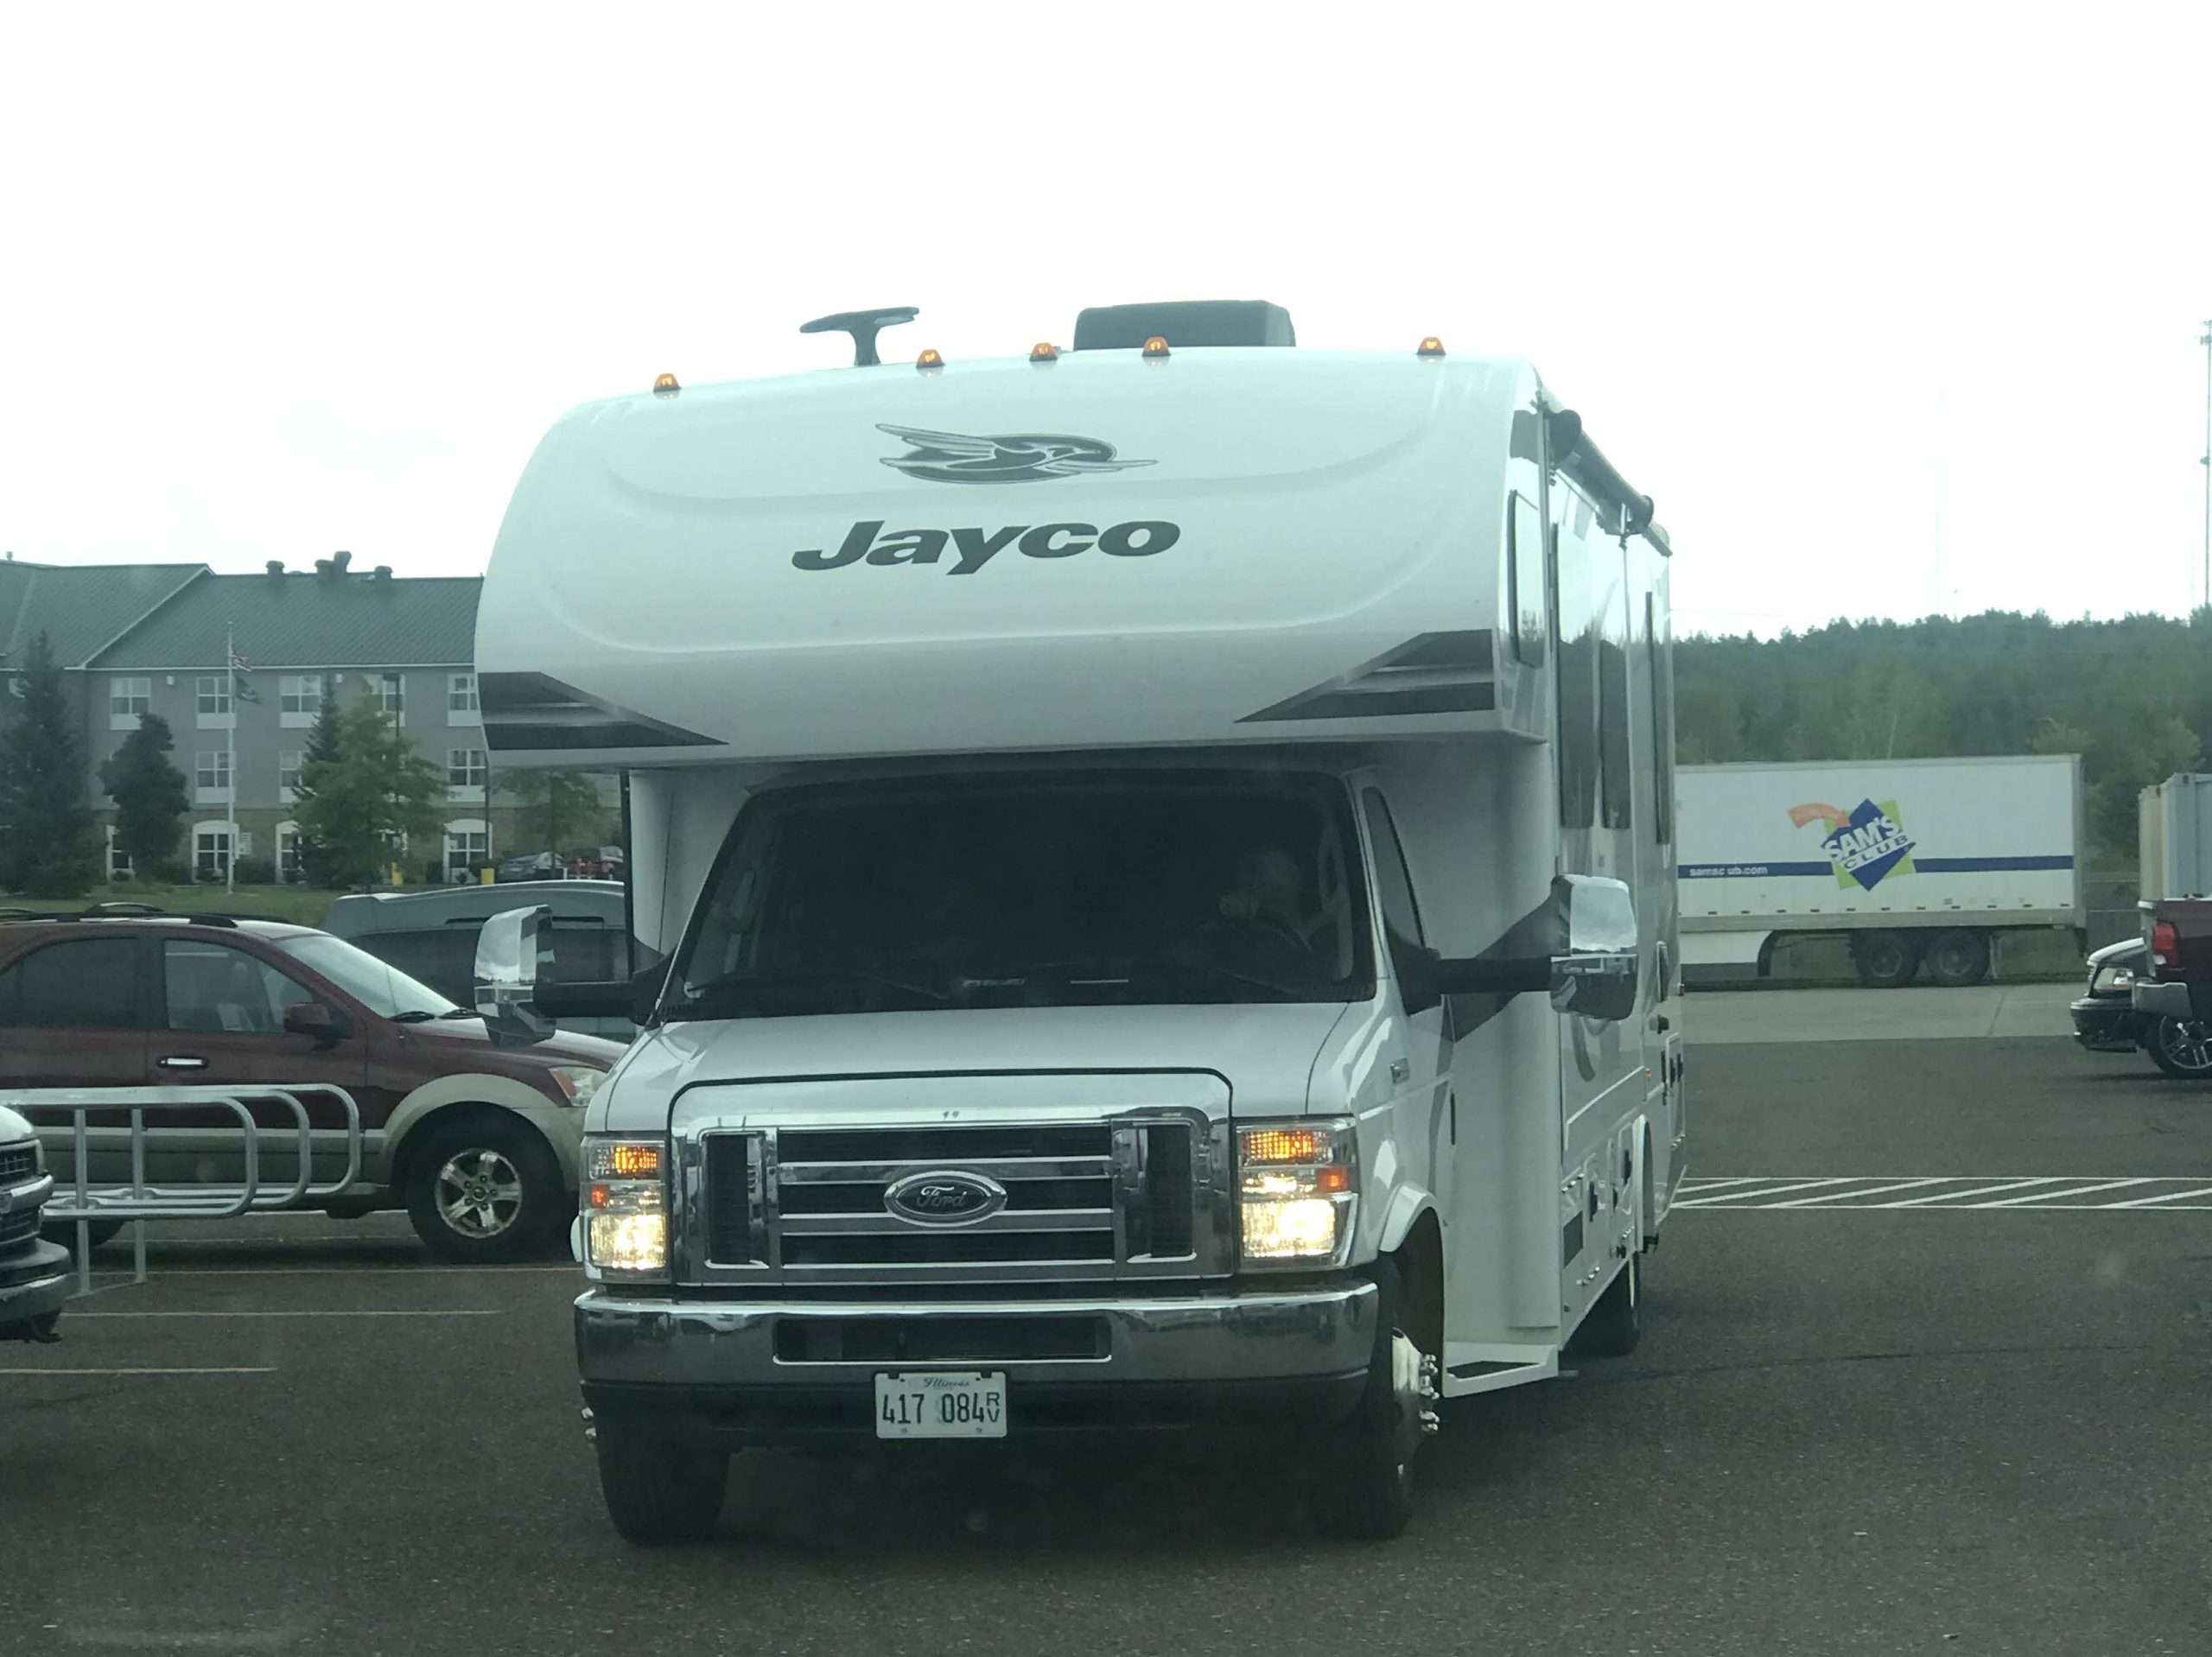 Jayco Seneca Class C RV in parking lot